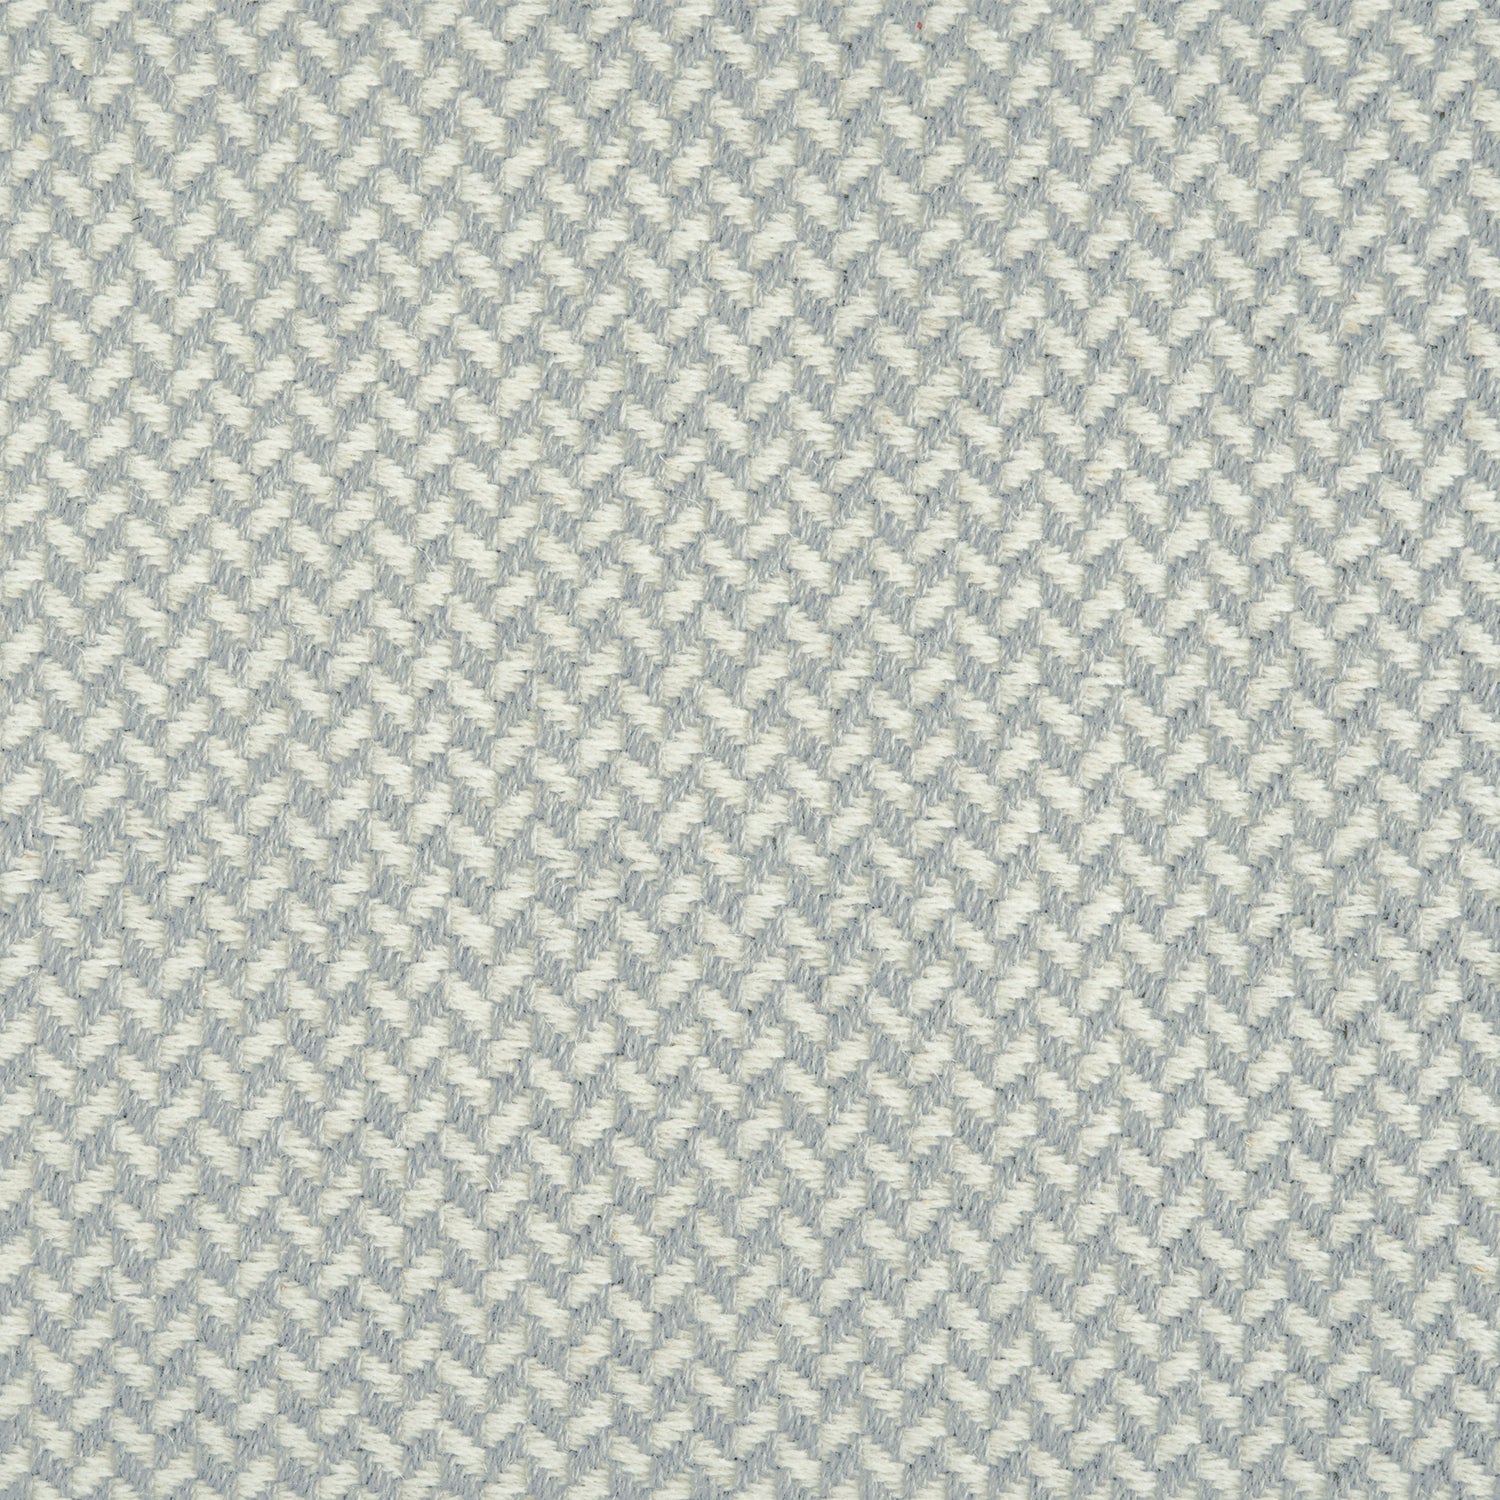 Wool broadloom carpet swatch in a herringbone pattern in shades of alternating cream and light gray.